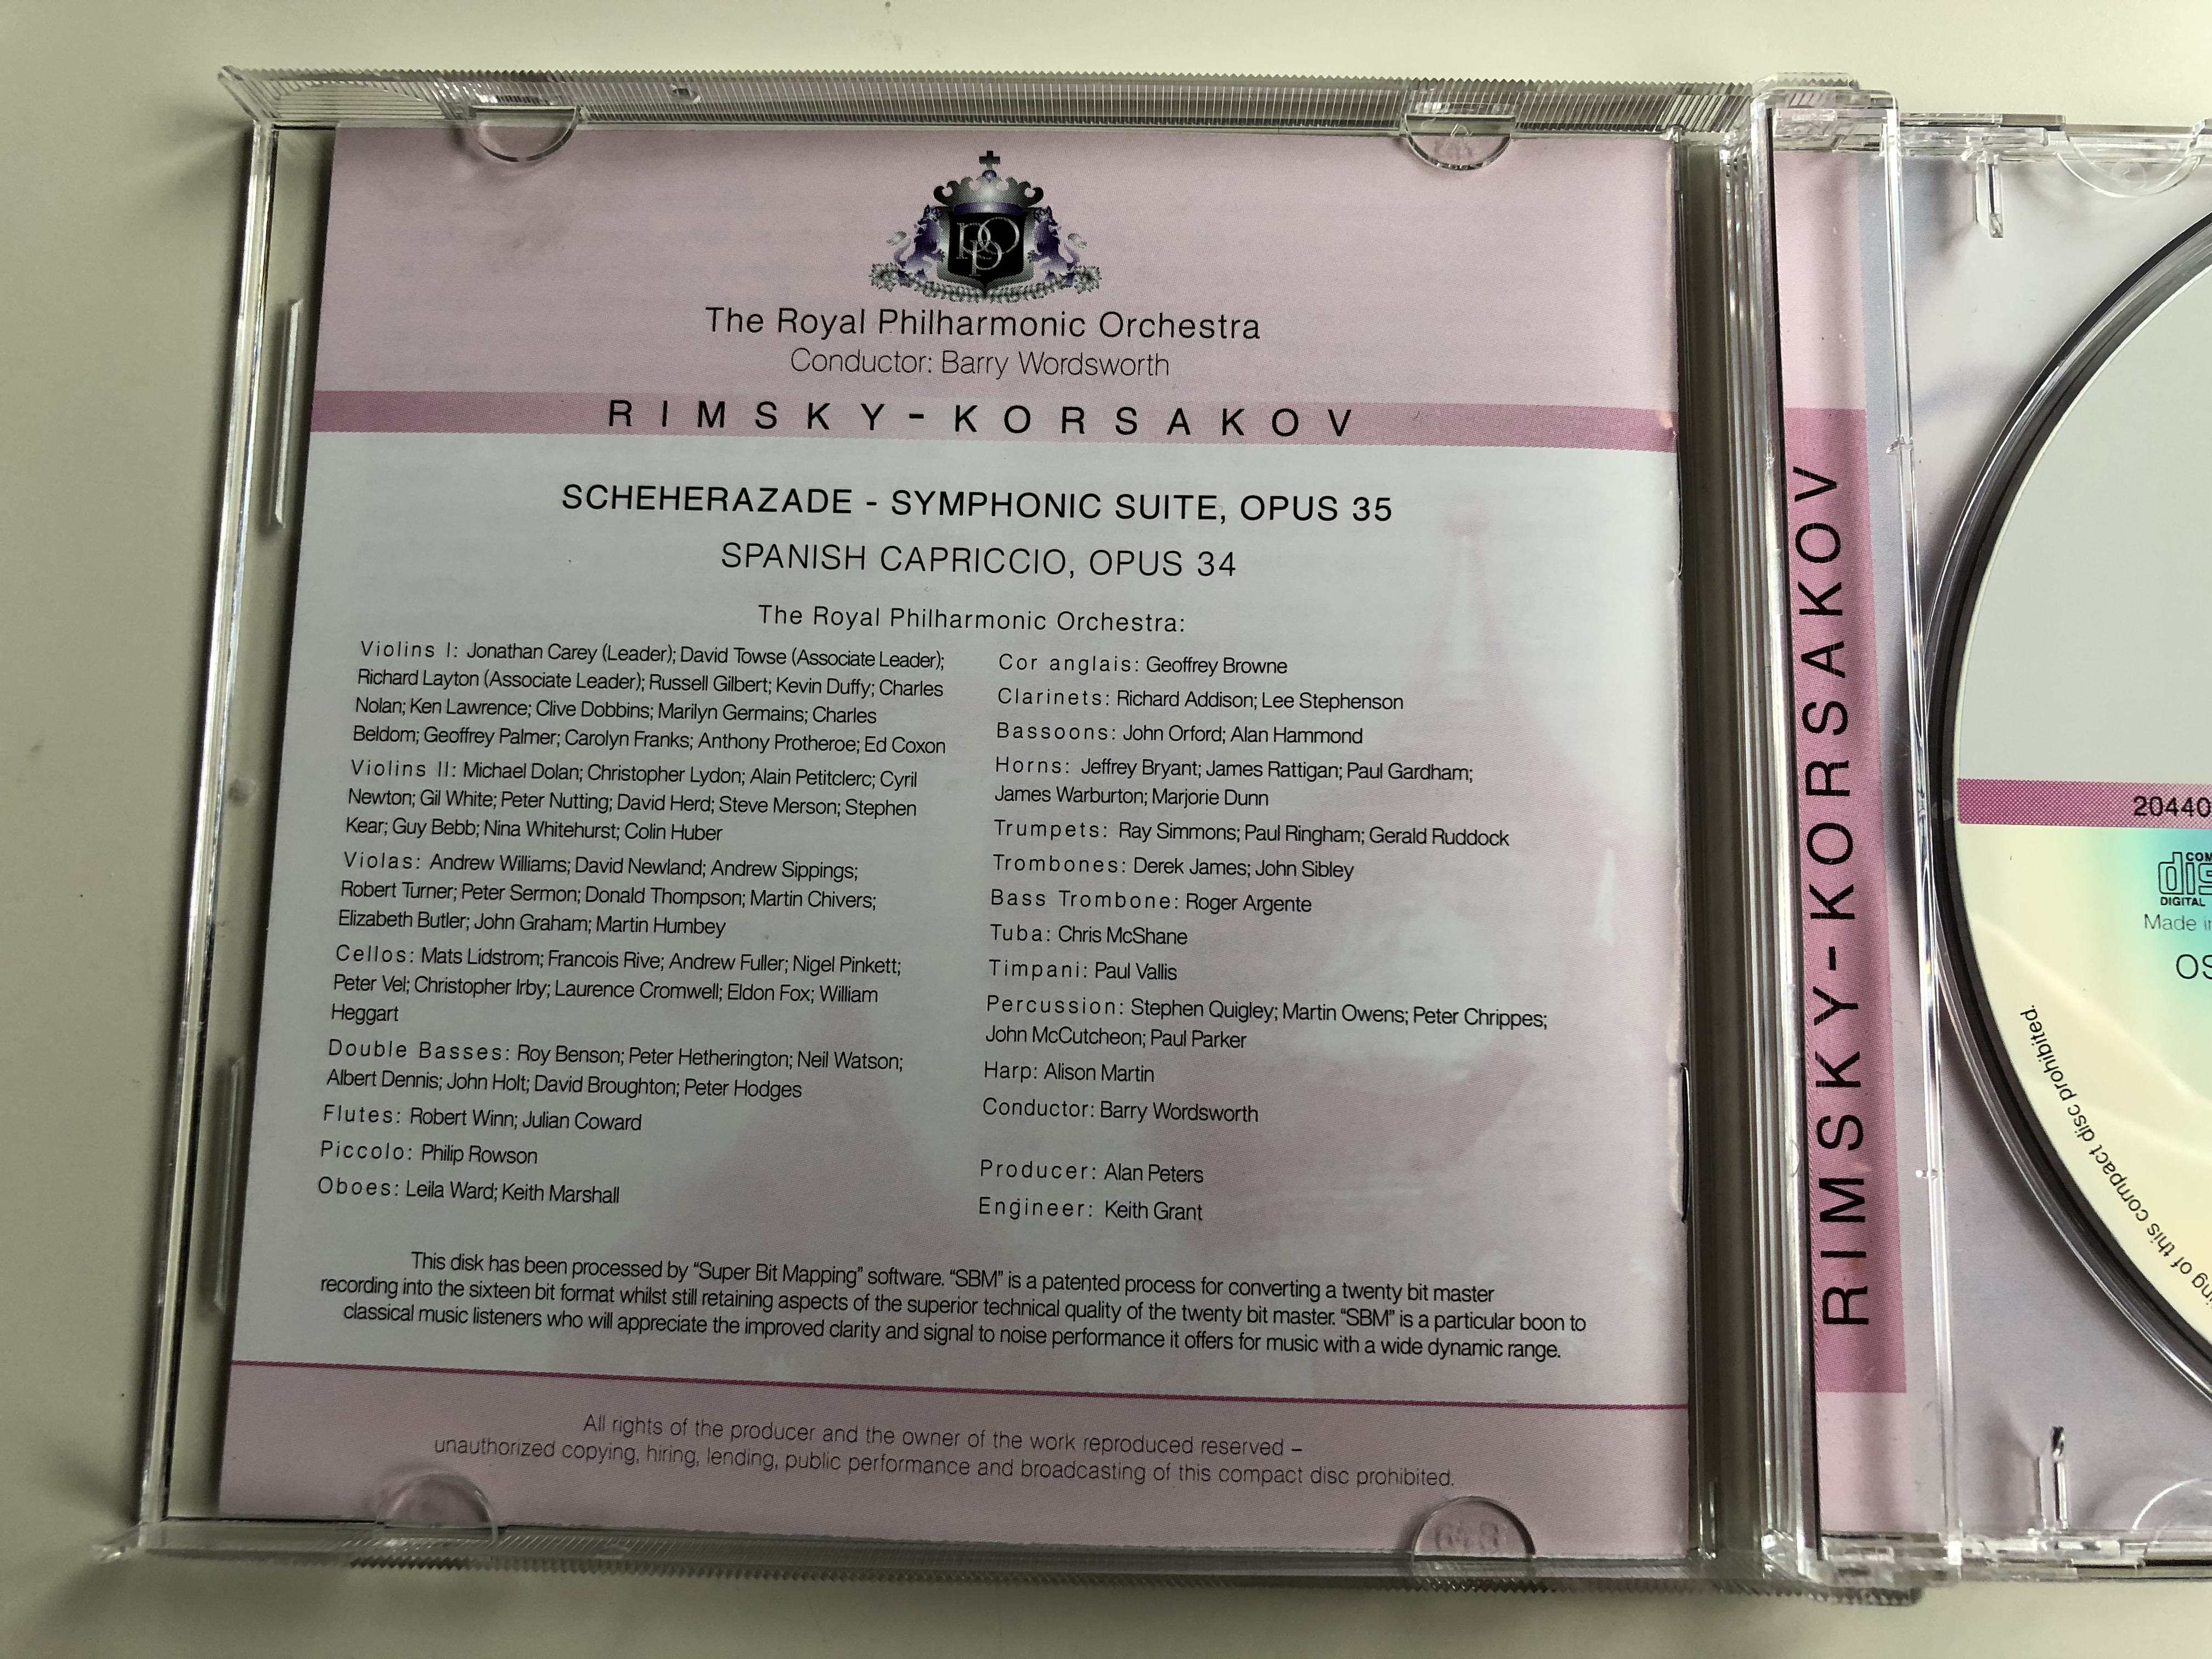 rimsky-korsakov-scheherezade-symphonic-suite-opus-35-spanish-capriccio-opus-34-royal-philharmonic-orchestra-conductor-barry-woodsworth-centurion-music-audio-cd-1993-204403-201-5-.jpg